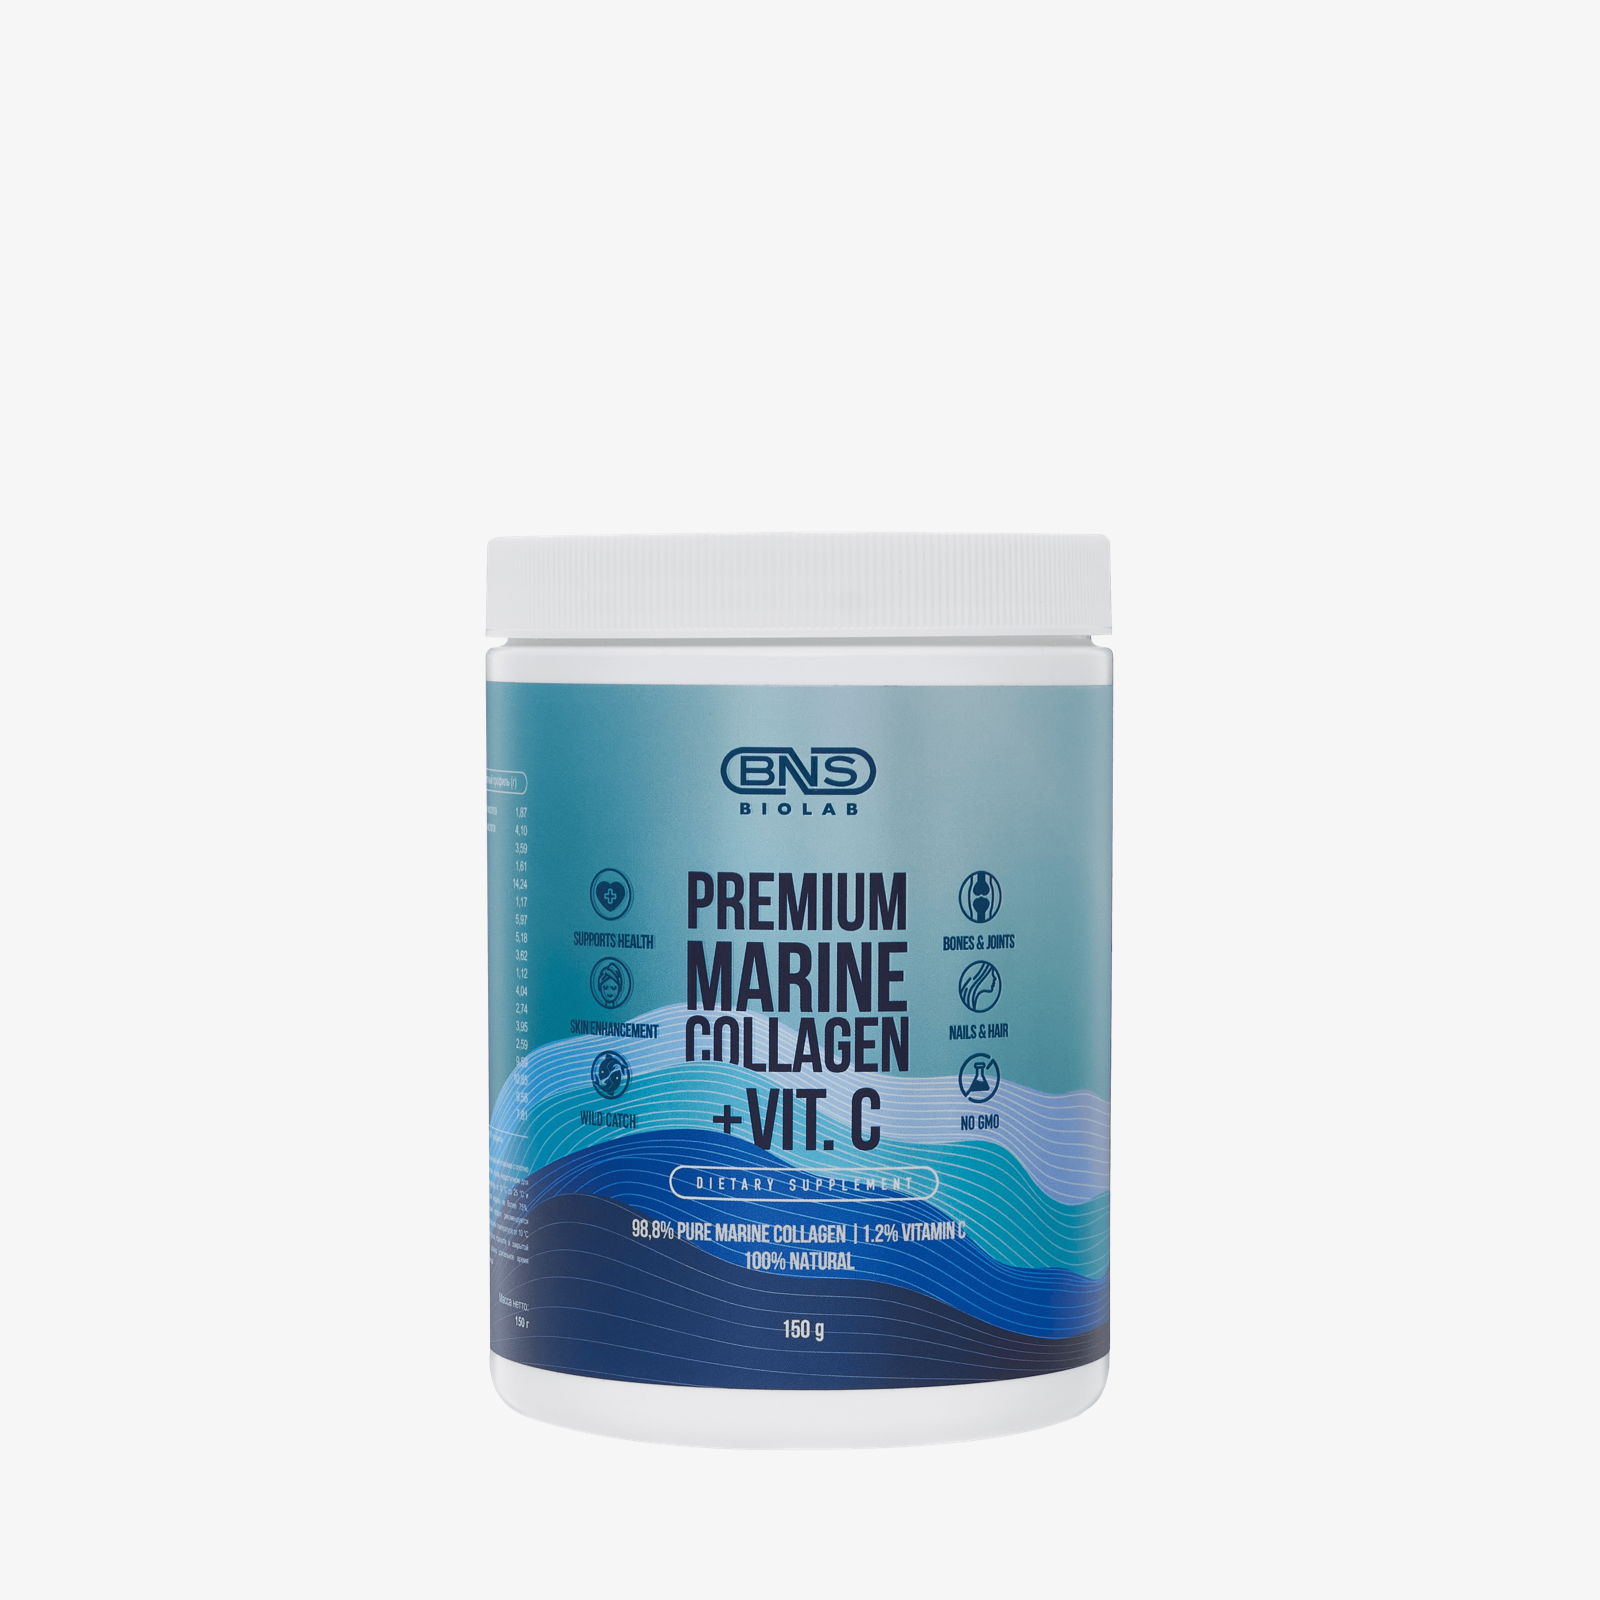 Collagen marine premium. БИОЛАБ премиум Марине коллаген. BNS Biolab Premium Marine Collagen+Vit.c. Морской коллаген. Jan Marini коллаген.